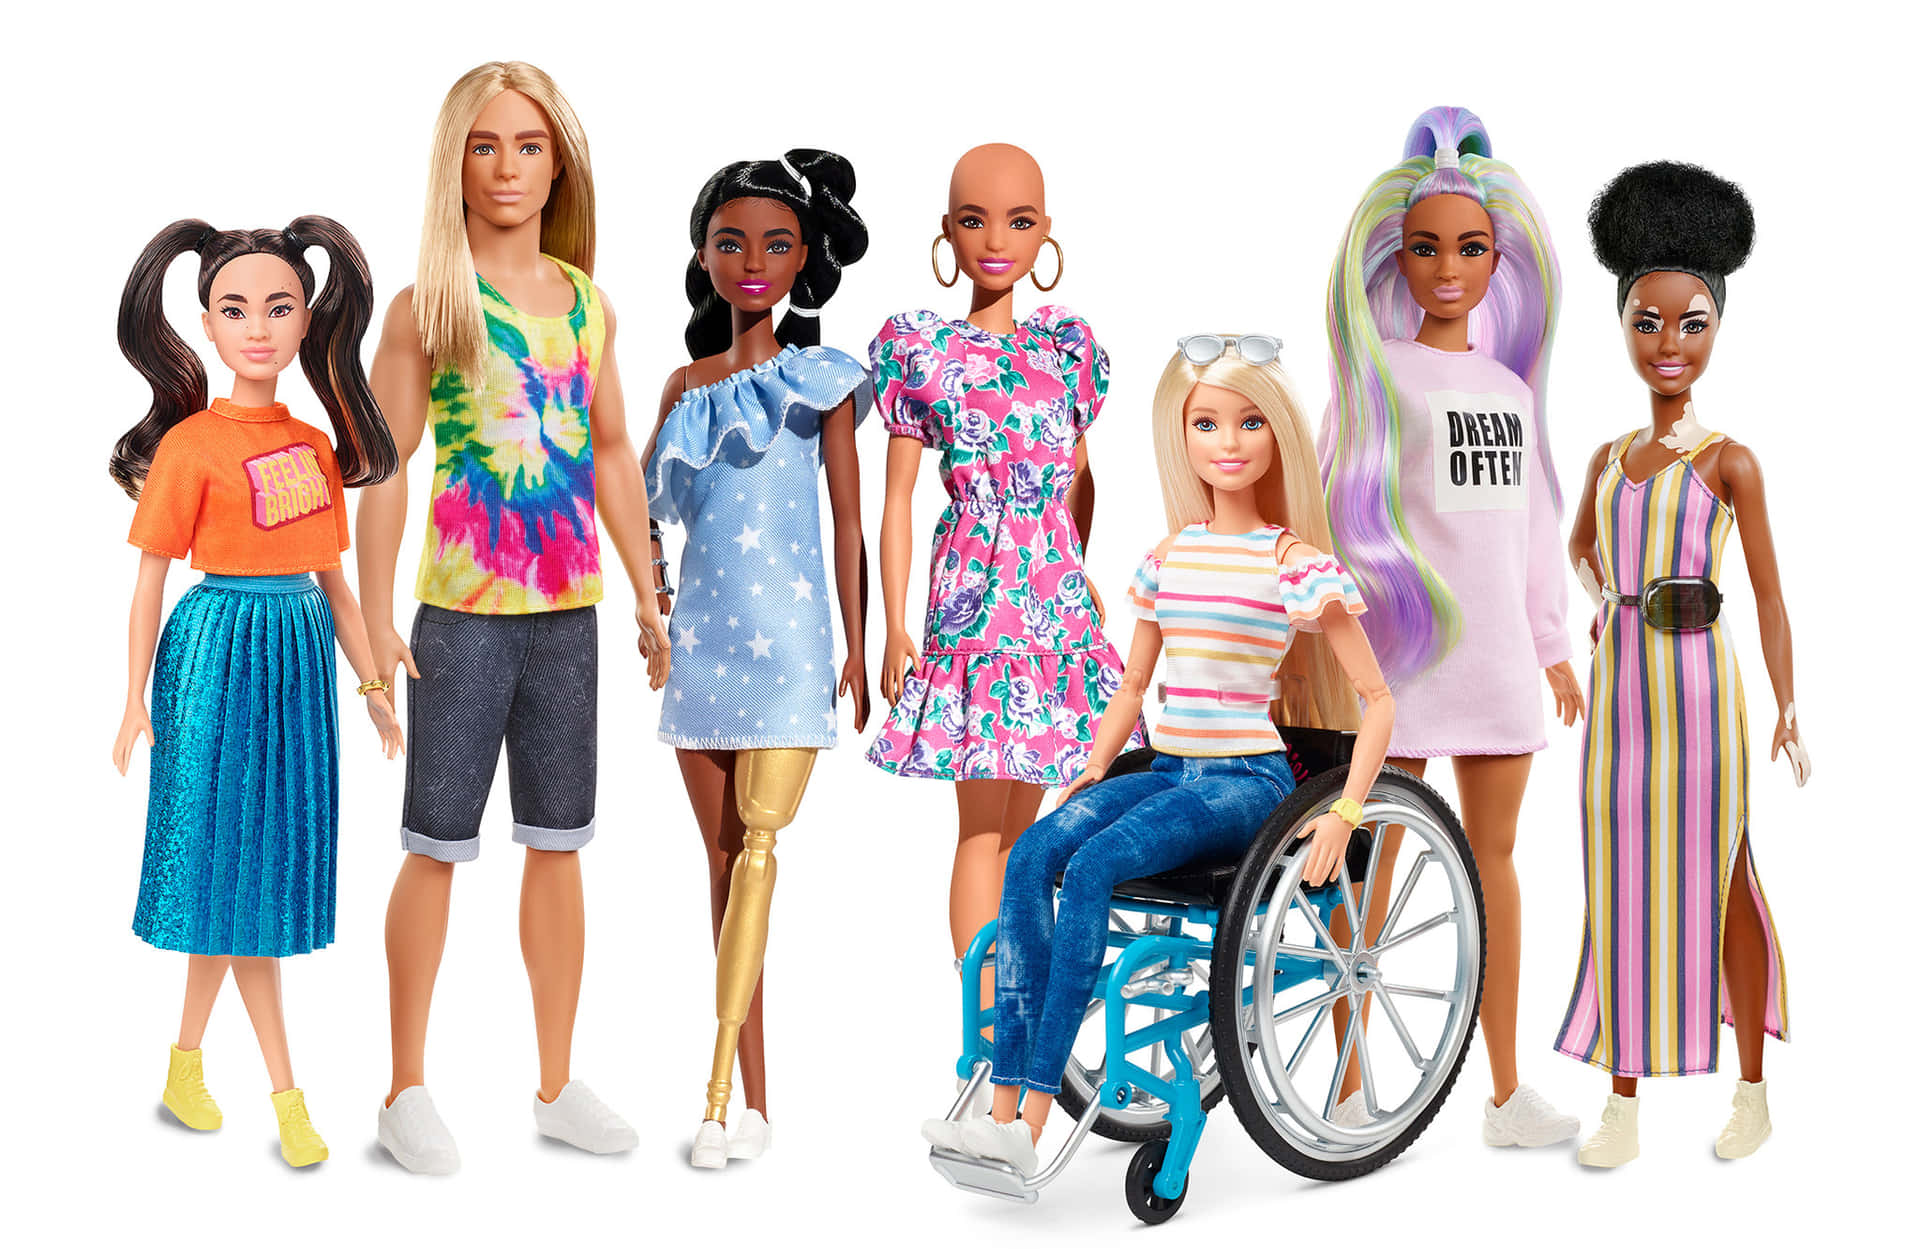 Celebrating the Iconic Barbie Doll